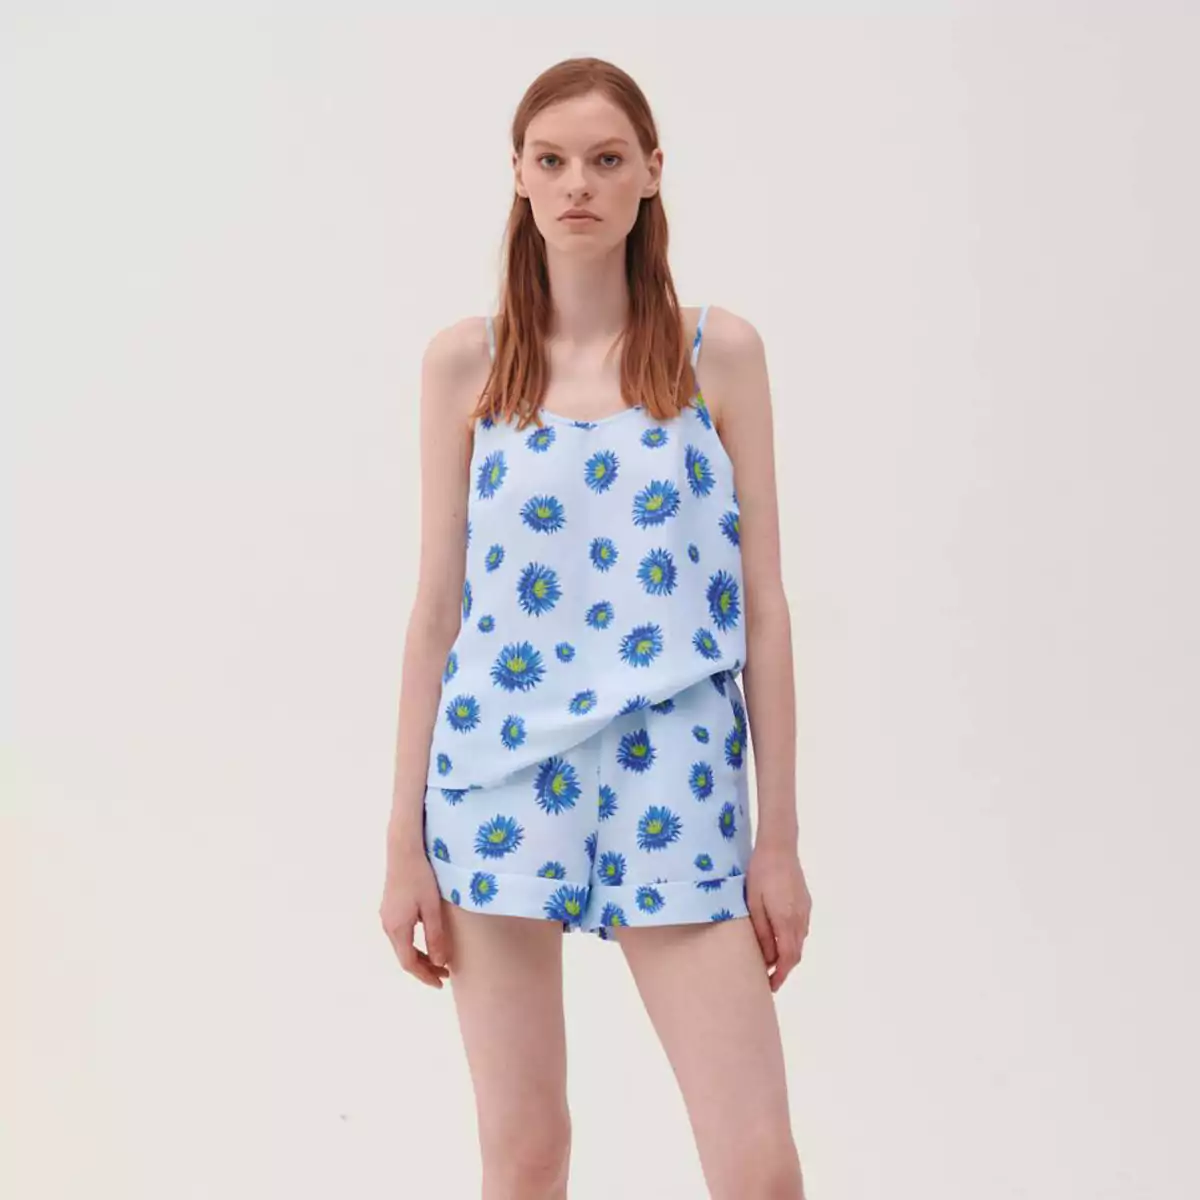 Women's pajamas "Cornflowers" (blue) by OLIZ